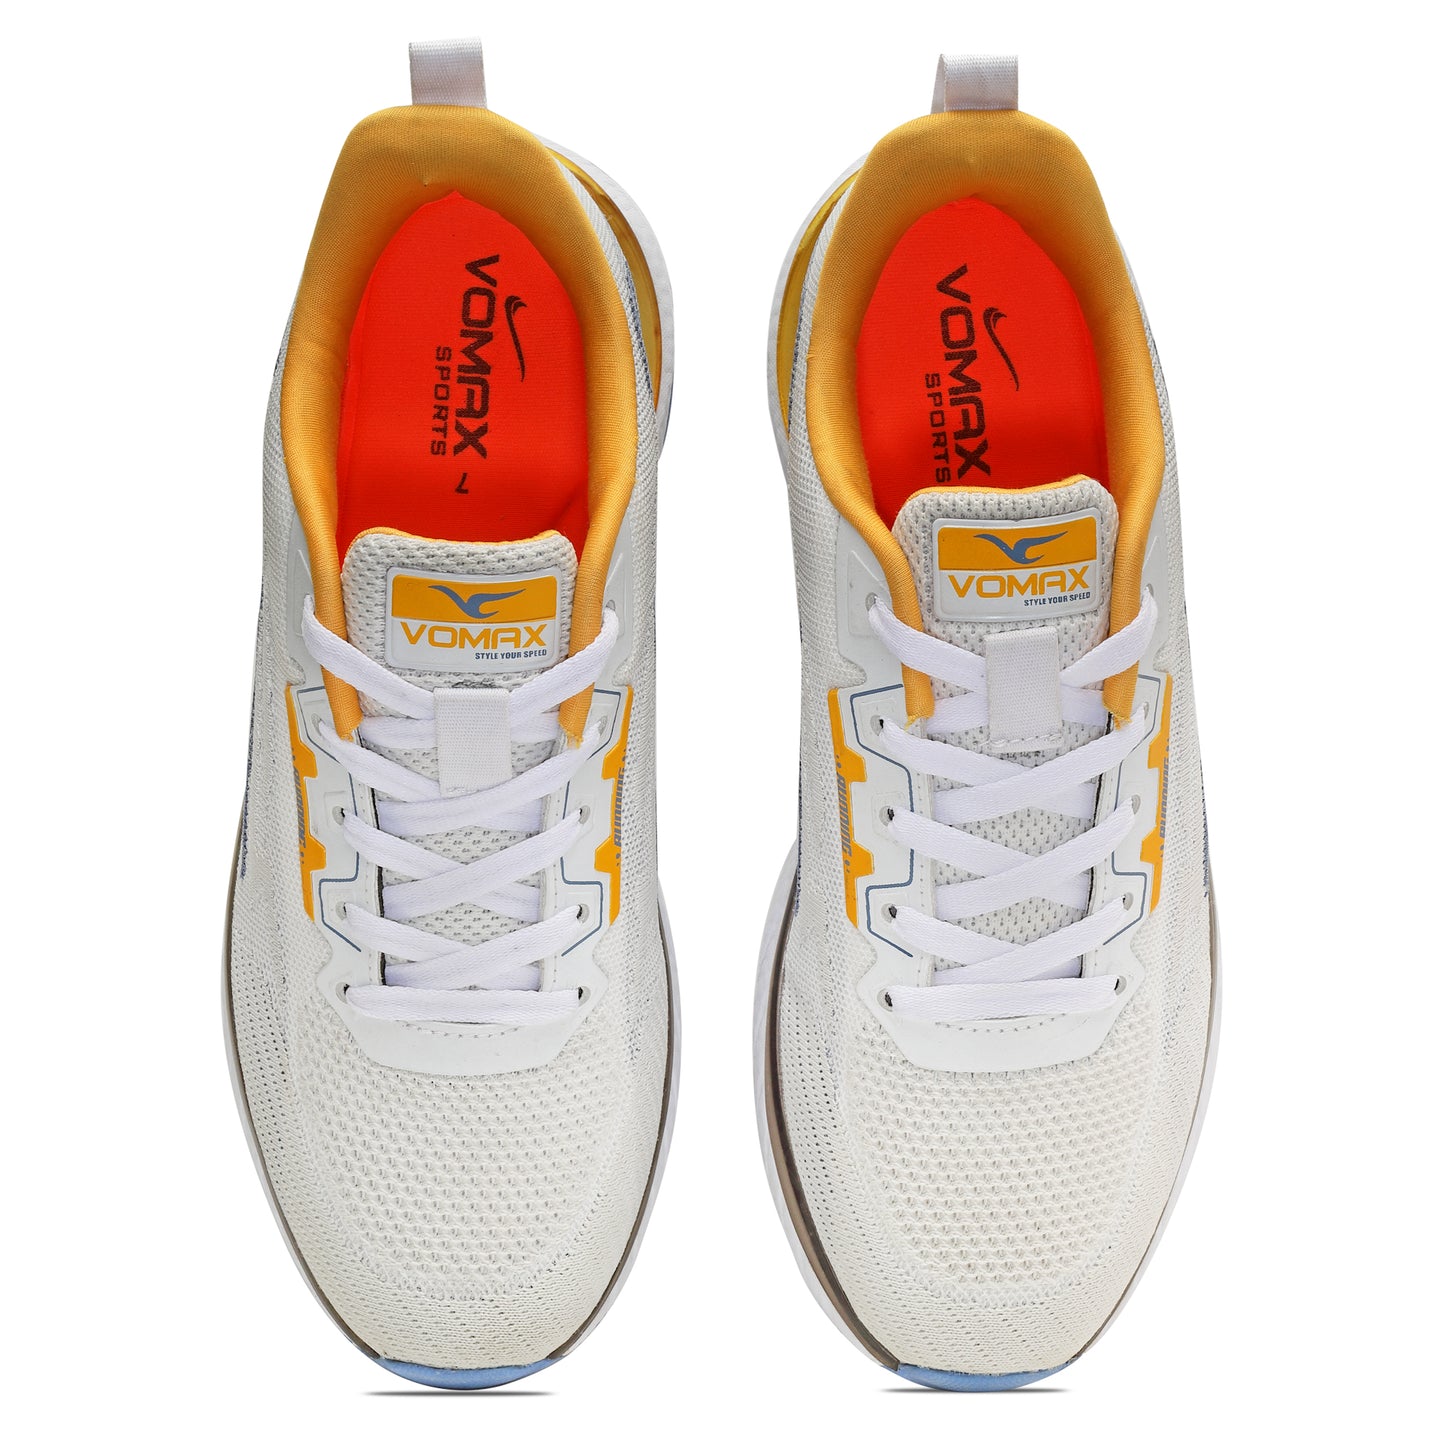 Vomax Sports Stalino-03 Men's Walking, Road Running Sports Shoes